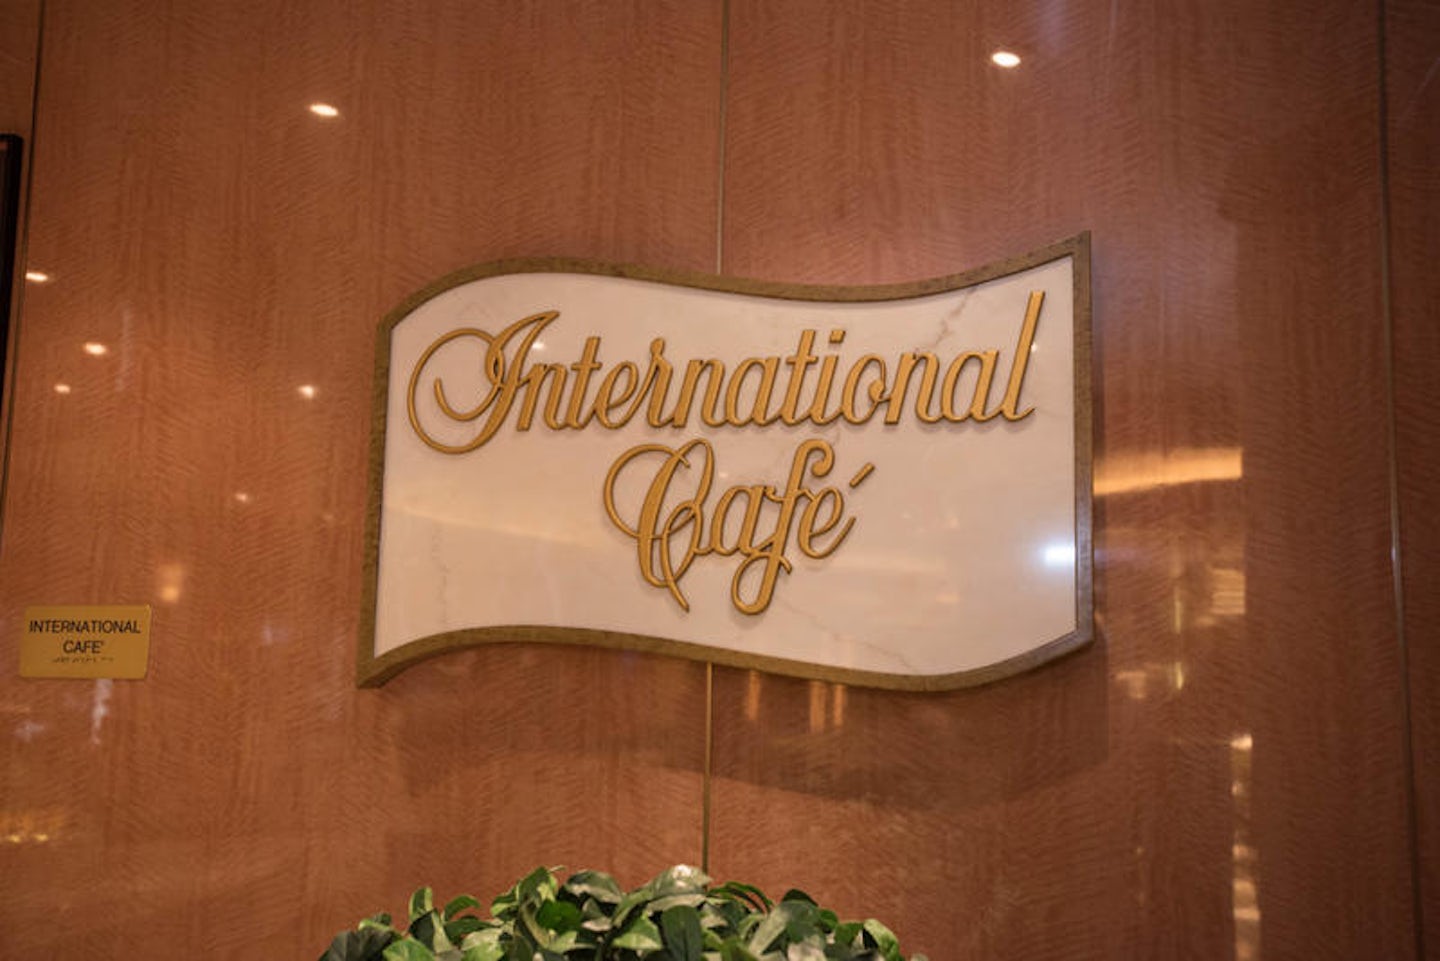 International Cafe on Regal Princess